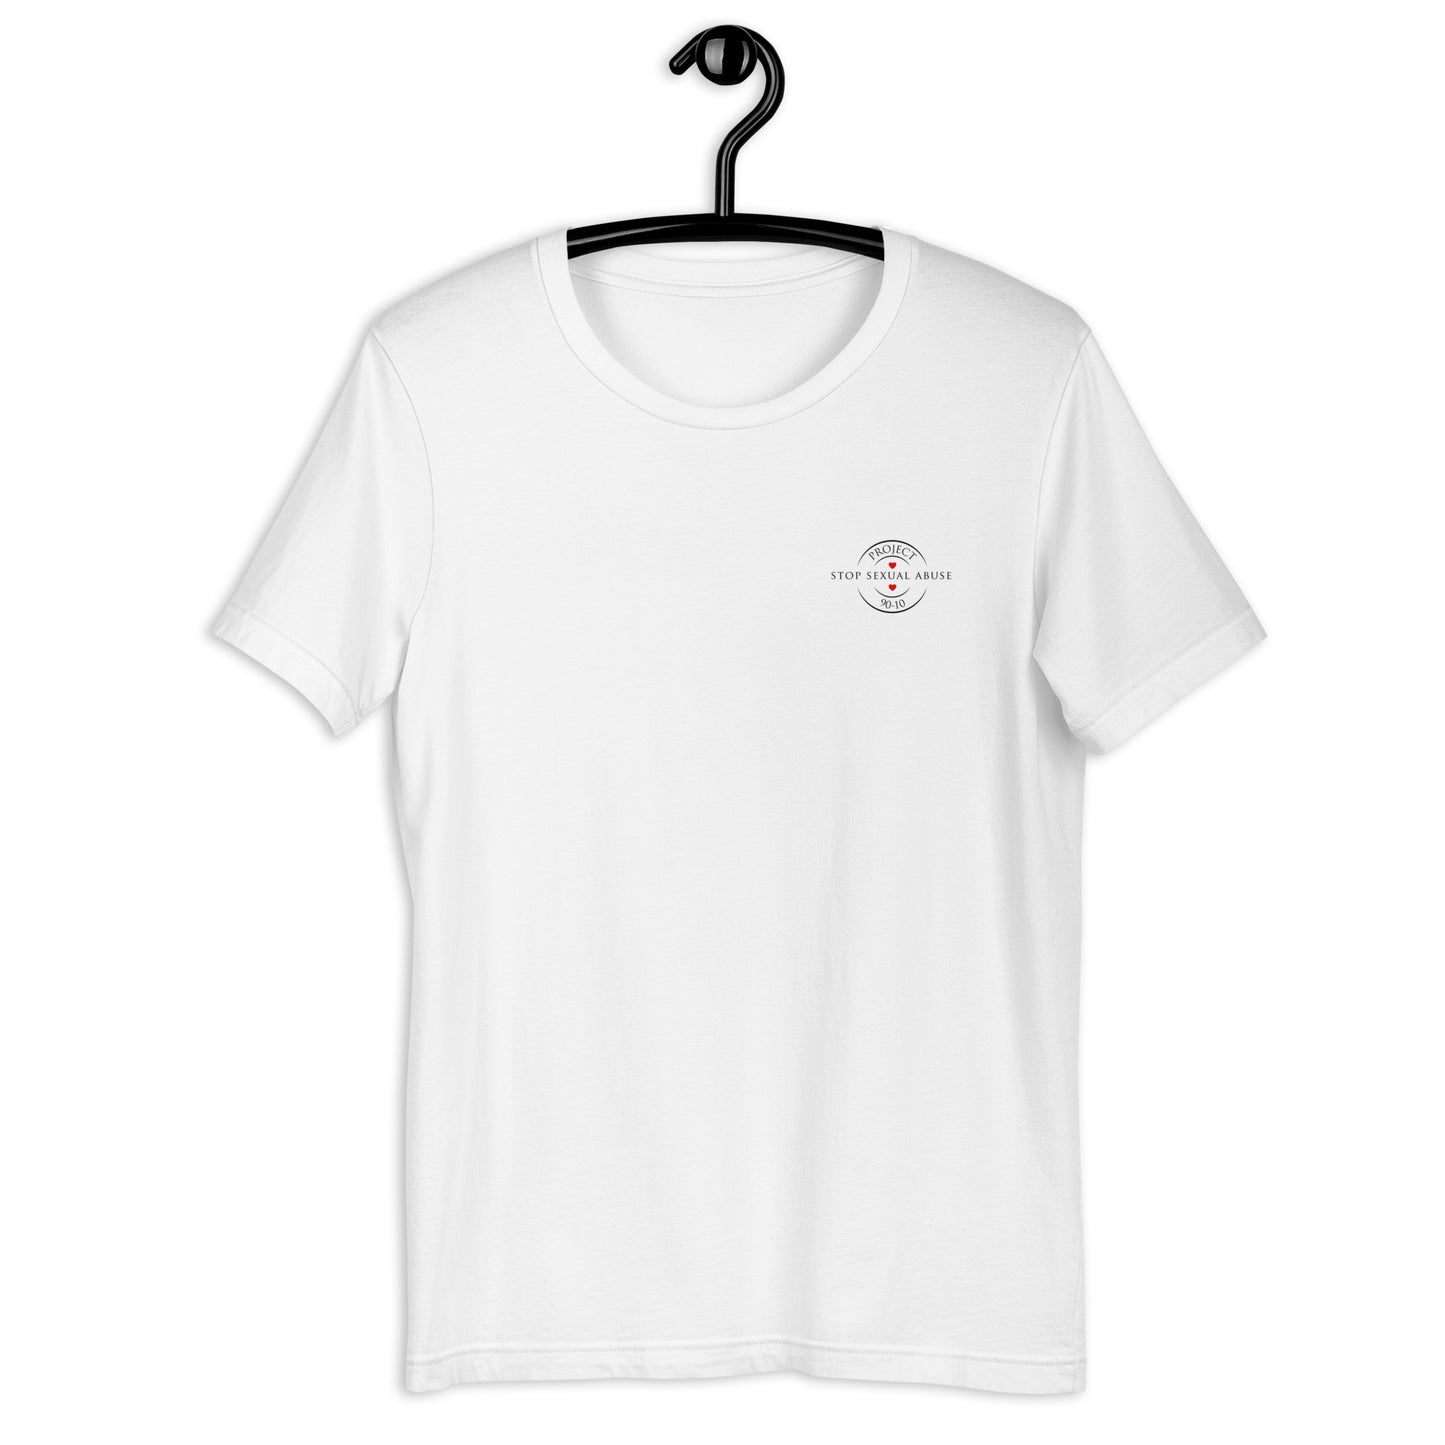 Official Project 90/10 unisex t-shirt